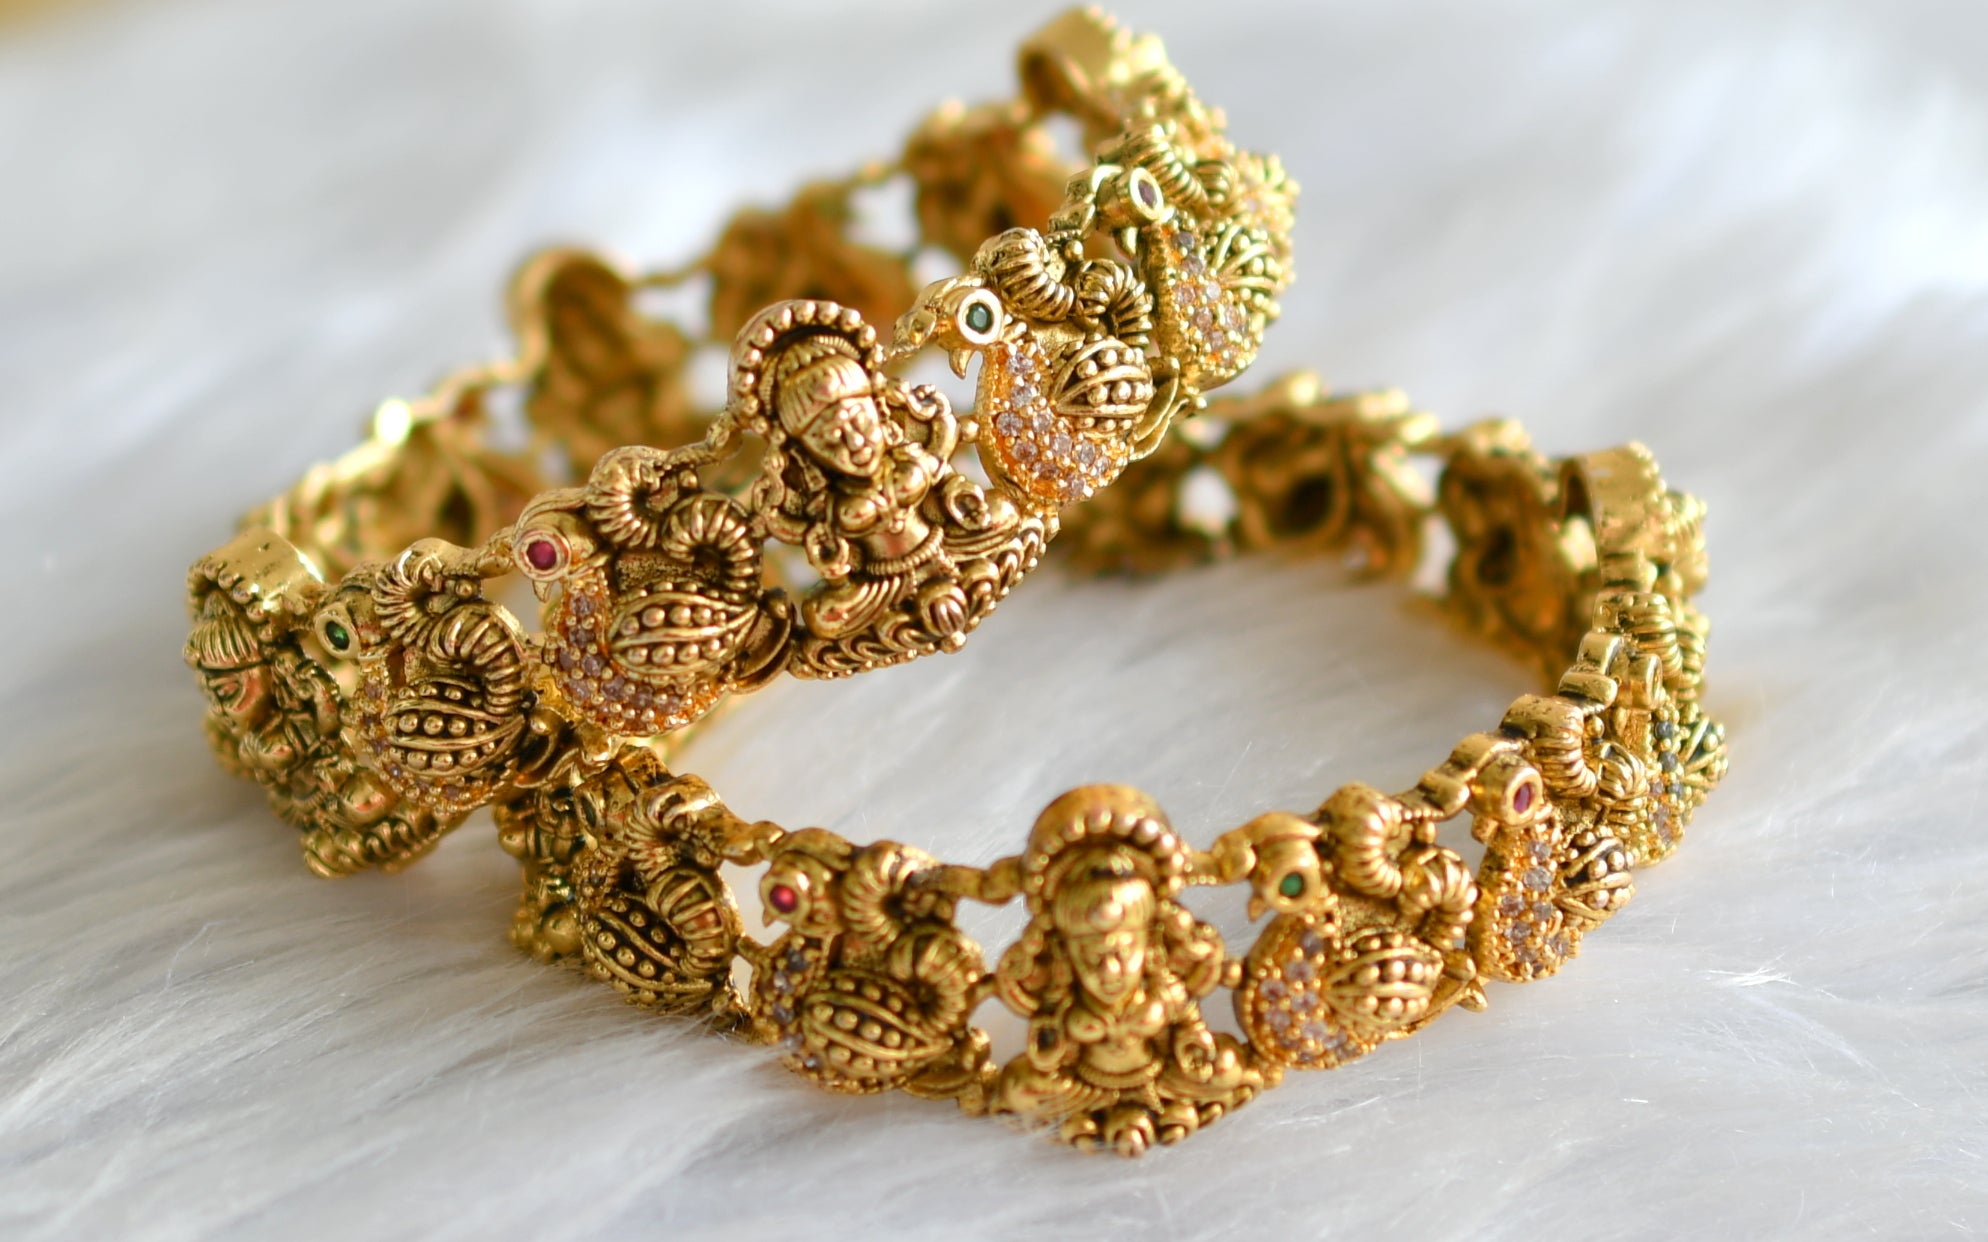 Antique gold bracelet with locket centerpiece – Kentshire